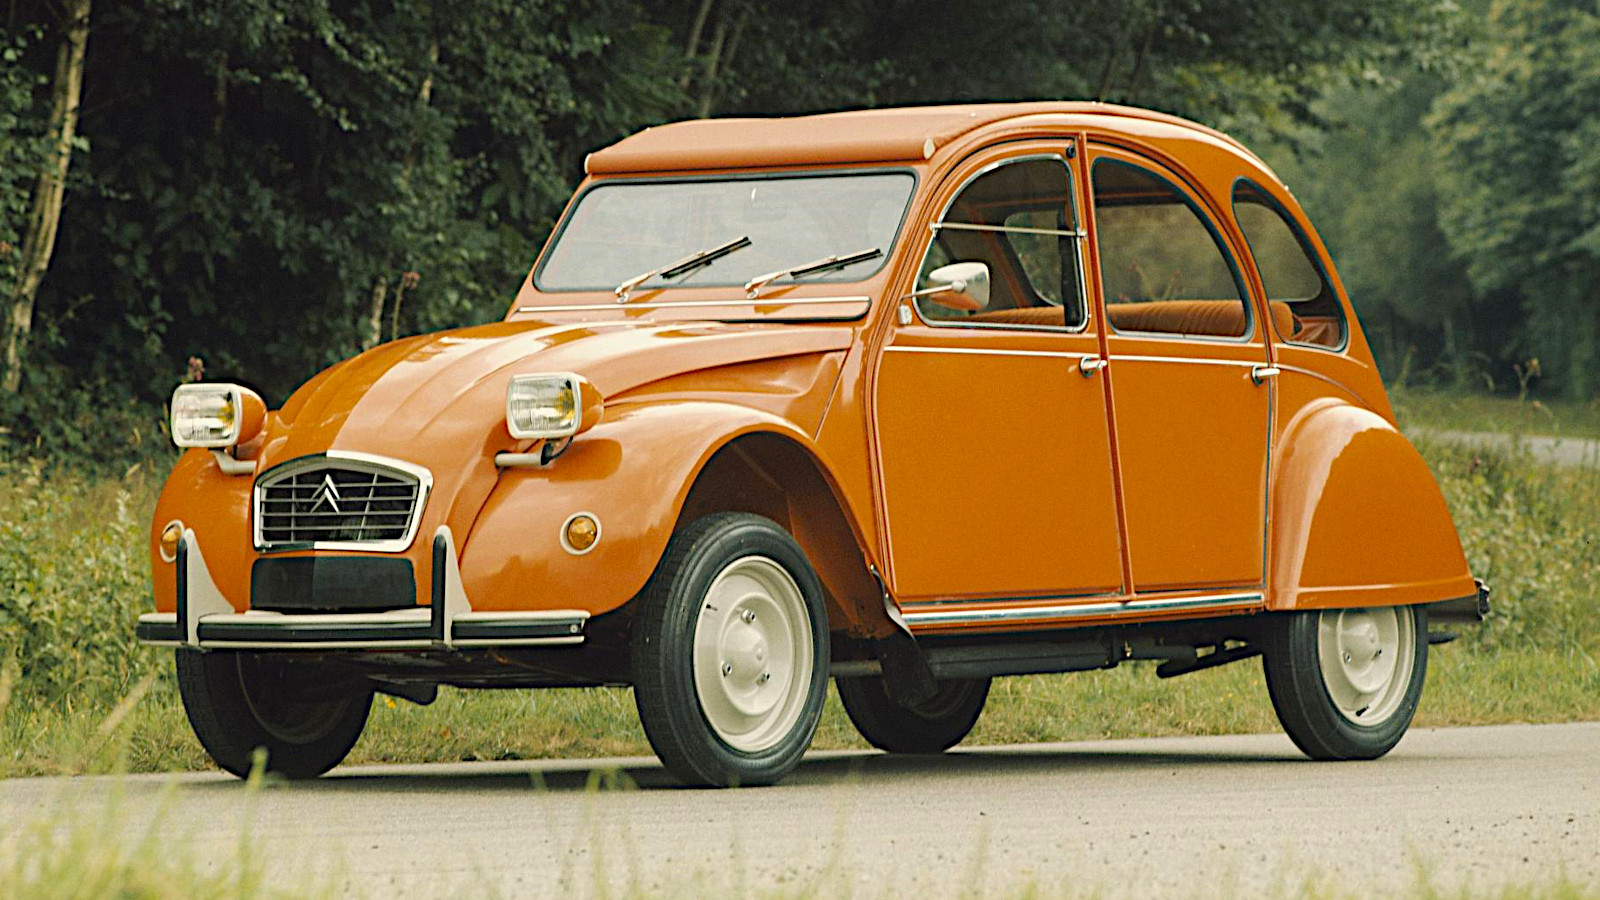 HISTORIC, ICONIC, LEGENDARY: CITROËN CELEBRATES 75 YEARS OF THE 2CV., Citroën